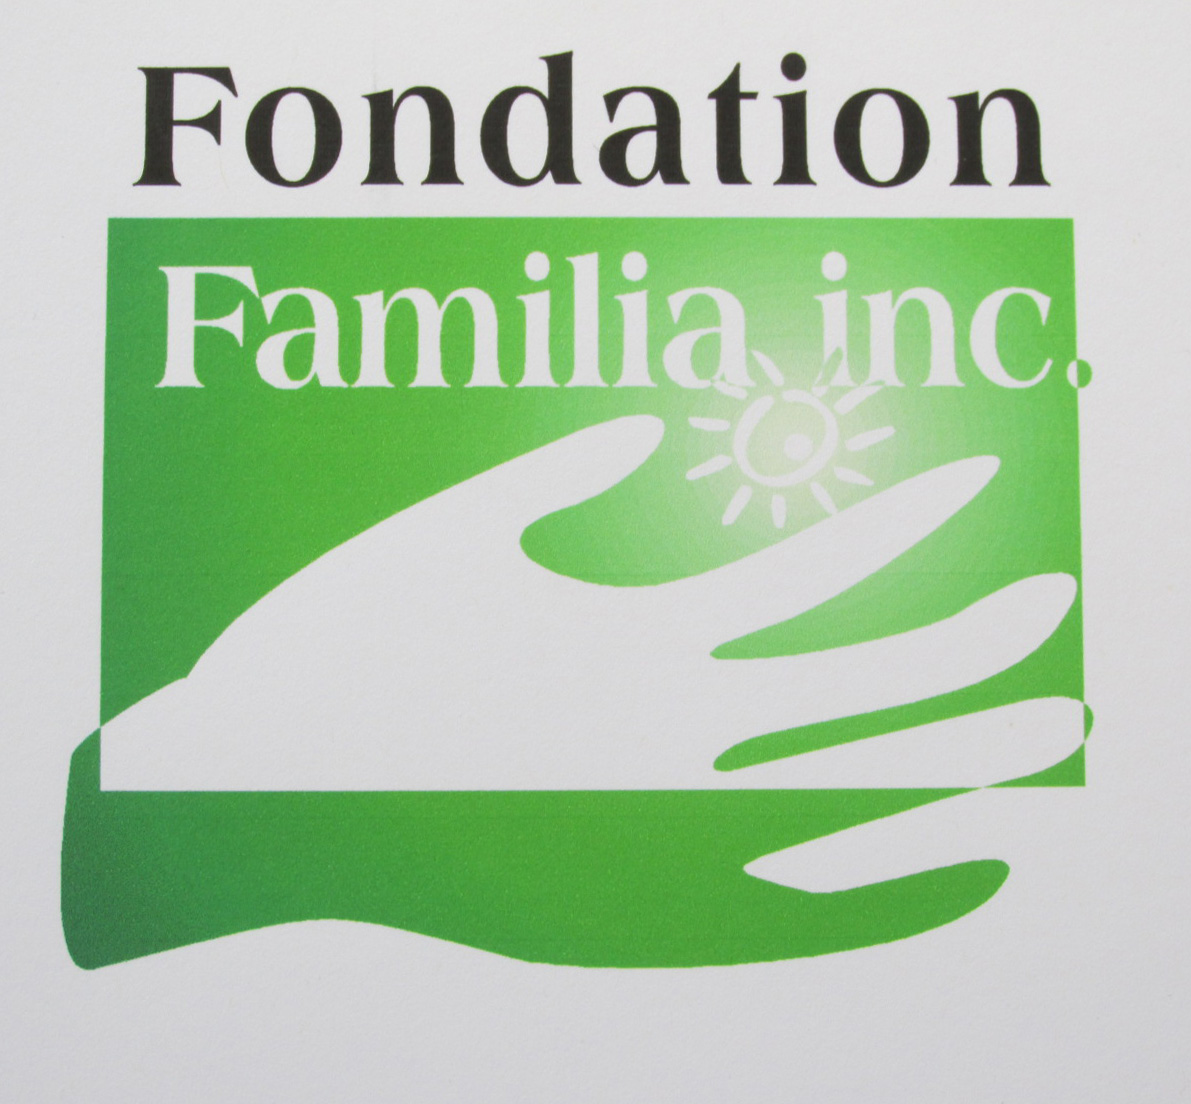 Fondation Famila